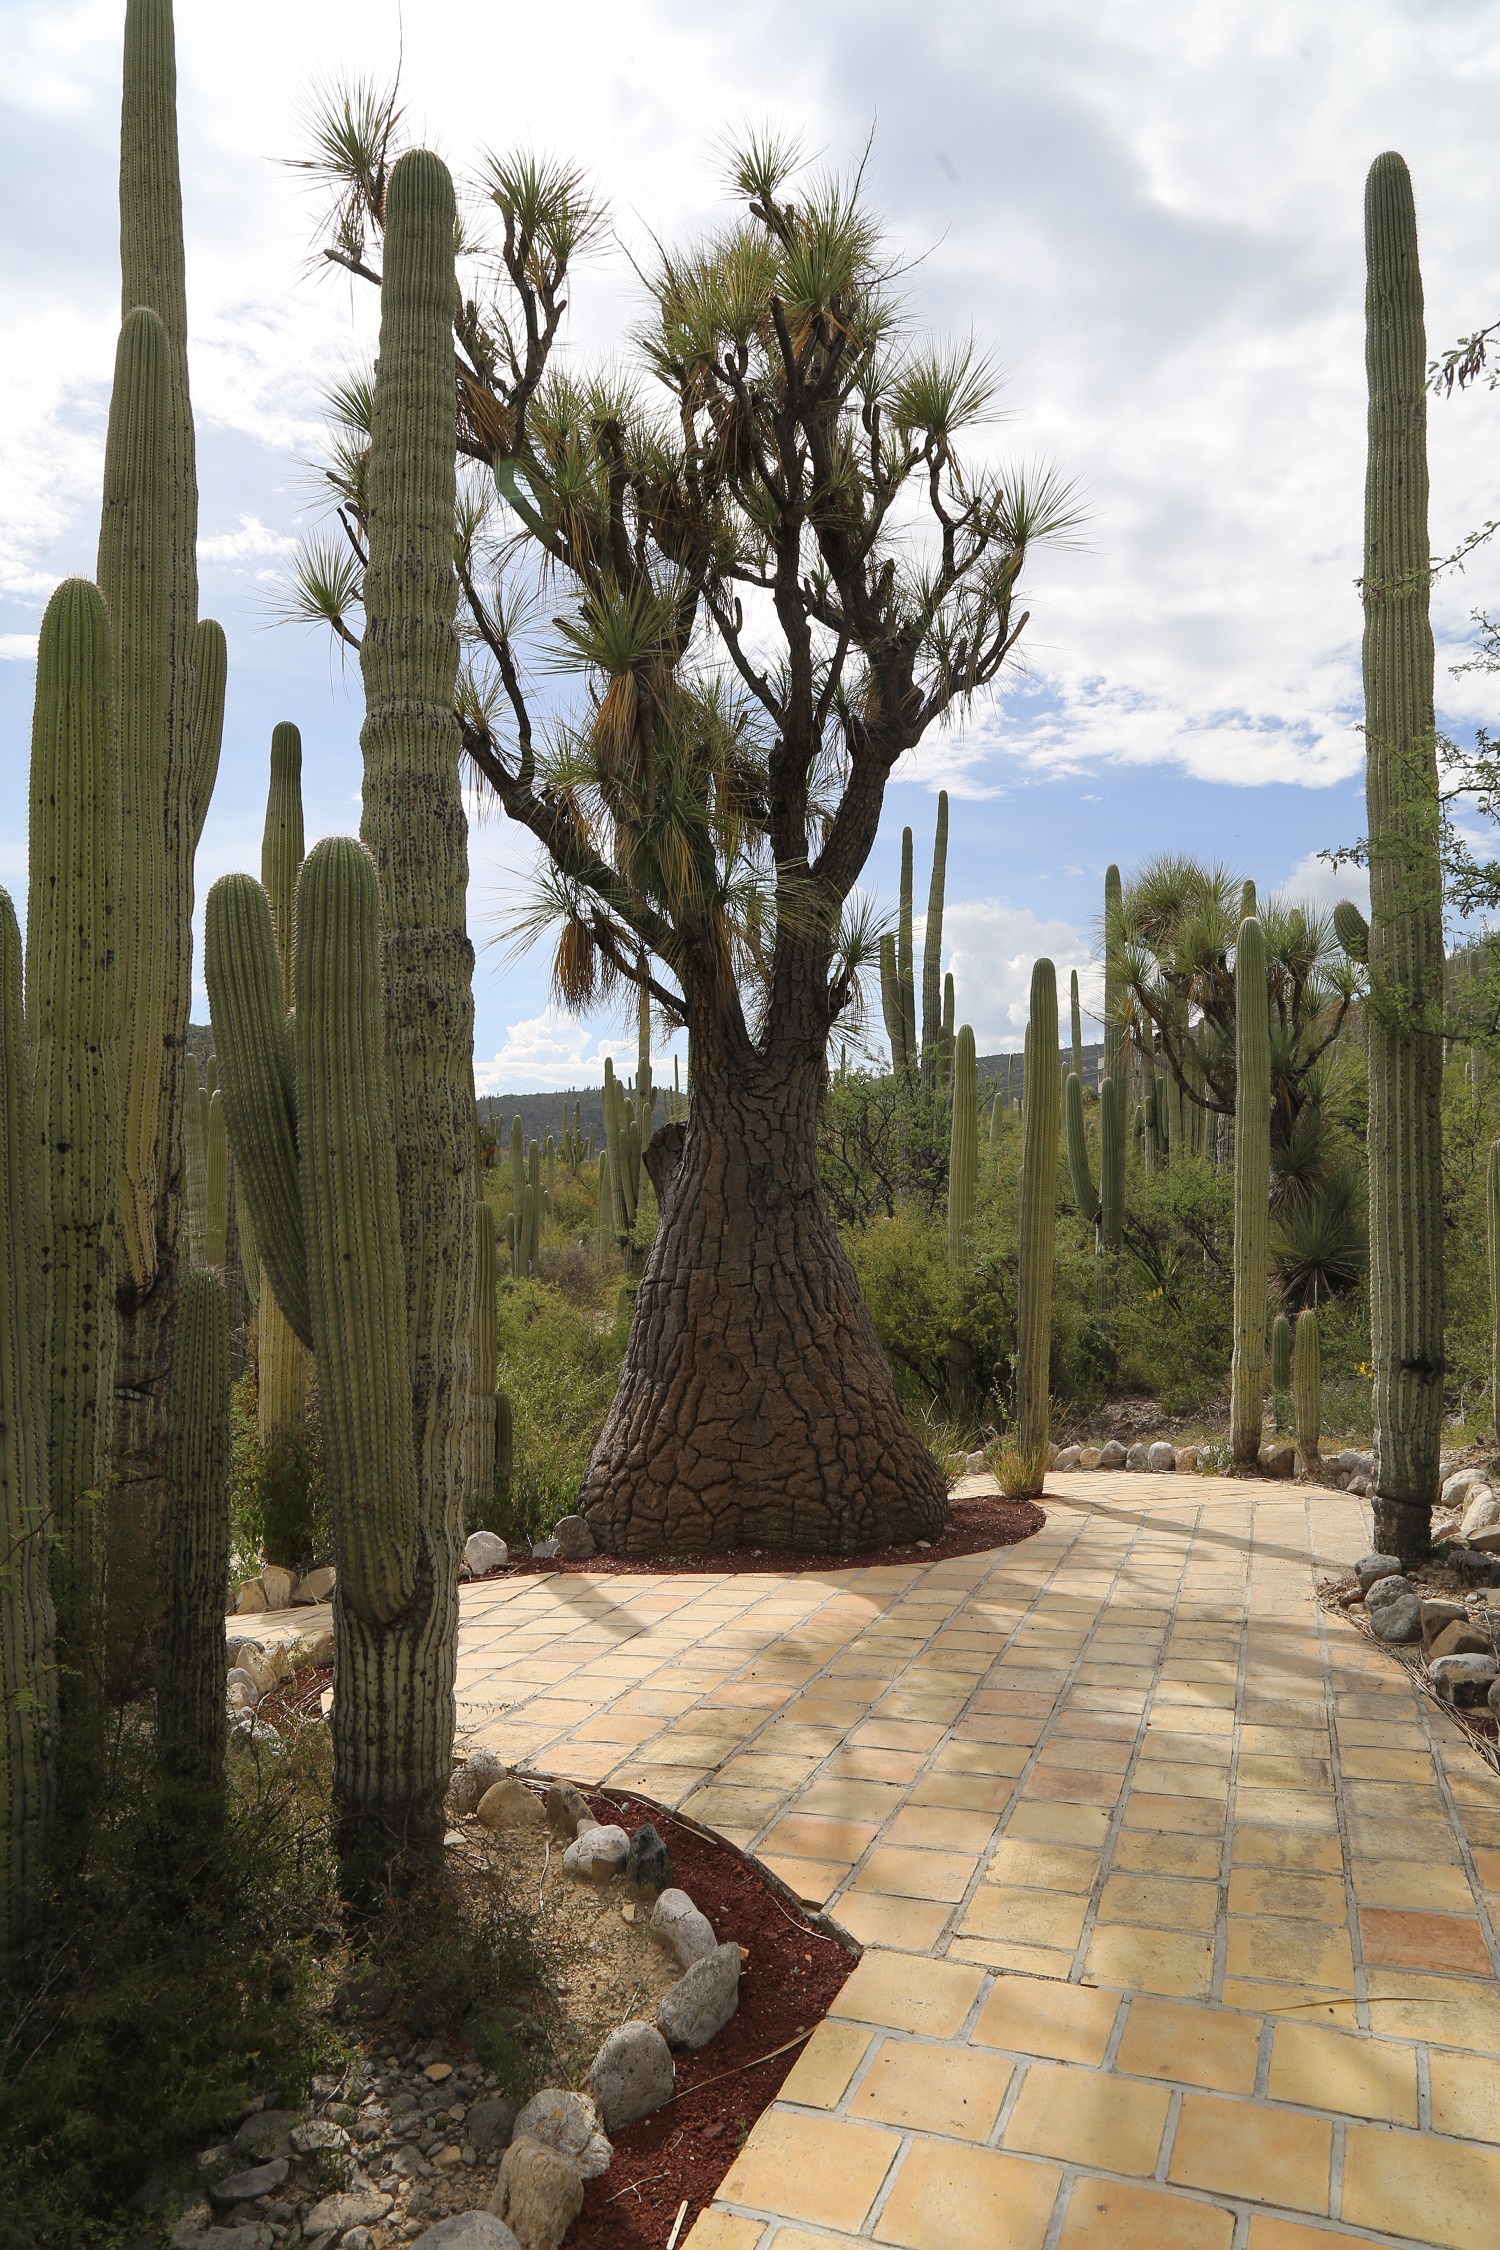 Vista general de cactus